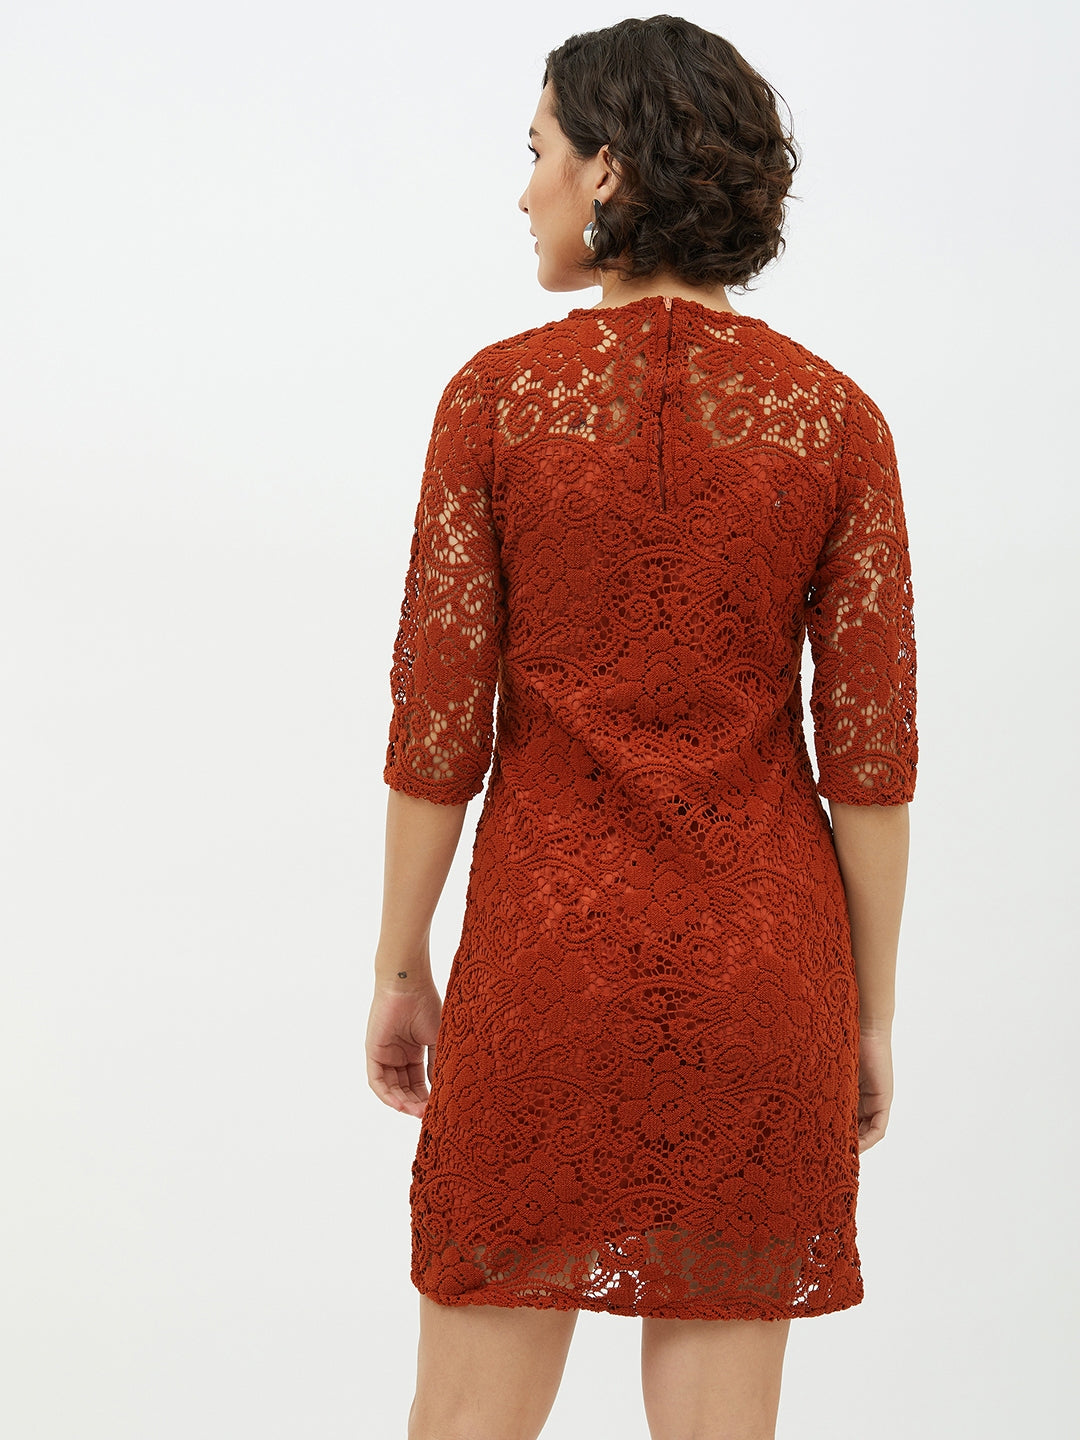 Women's Rust Lace Sheath Dress - StyleStone